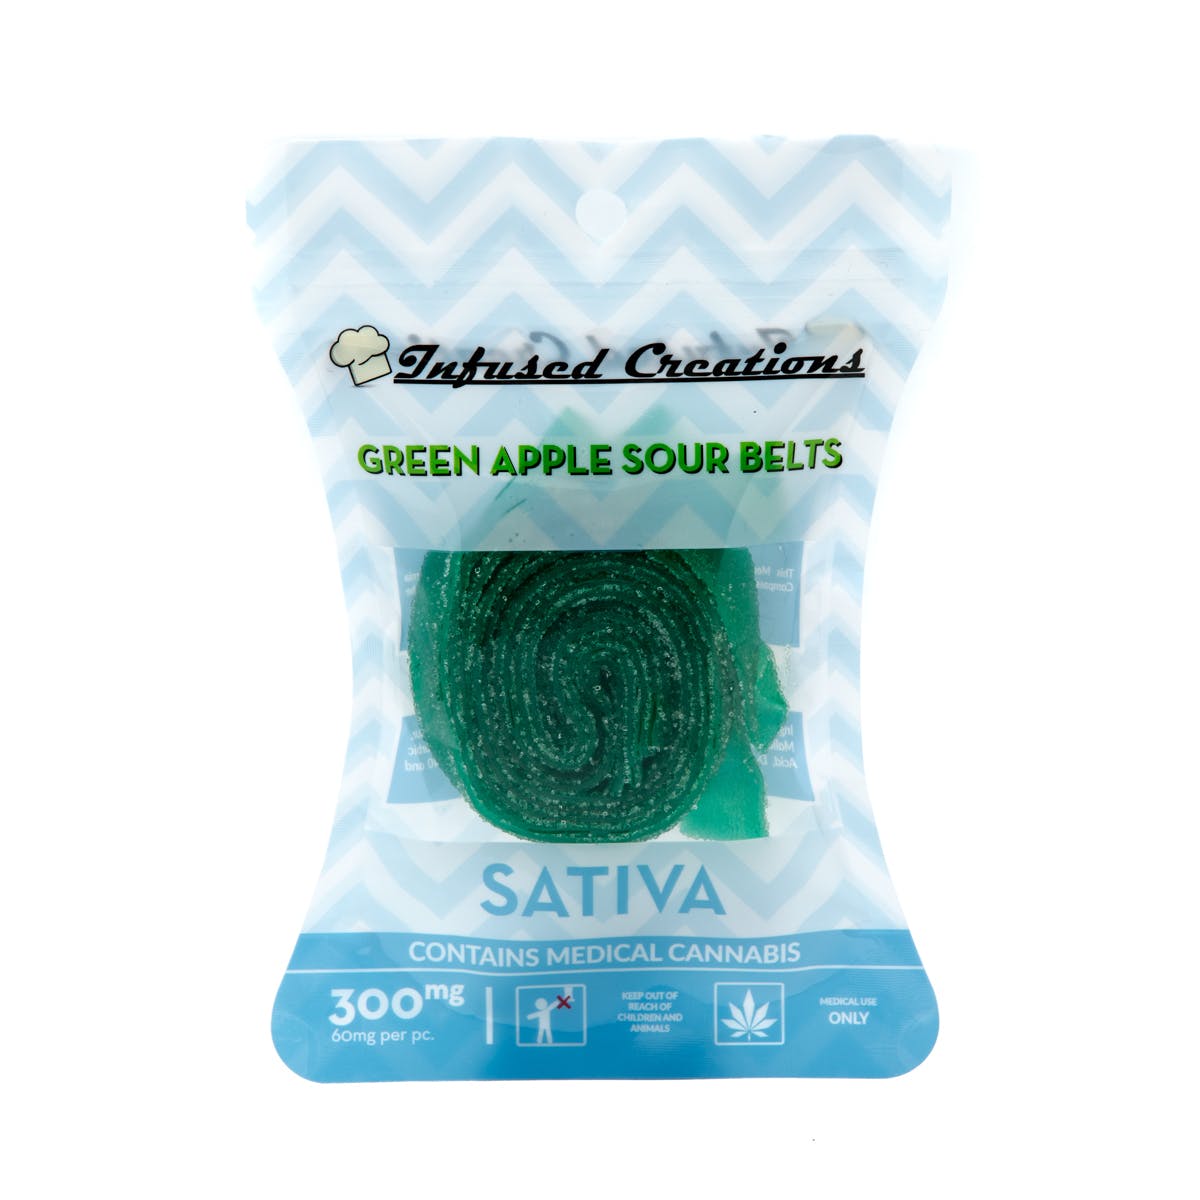 Green Apple Sour Belts Sativa, 300mg